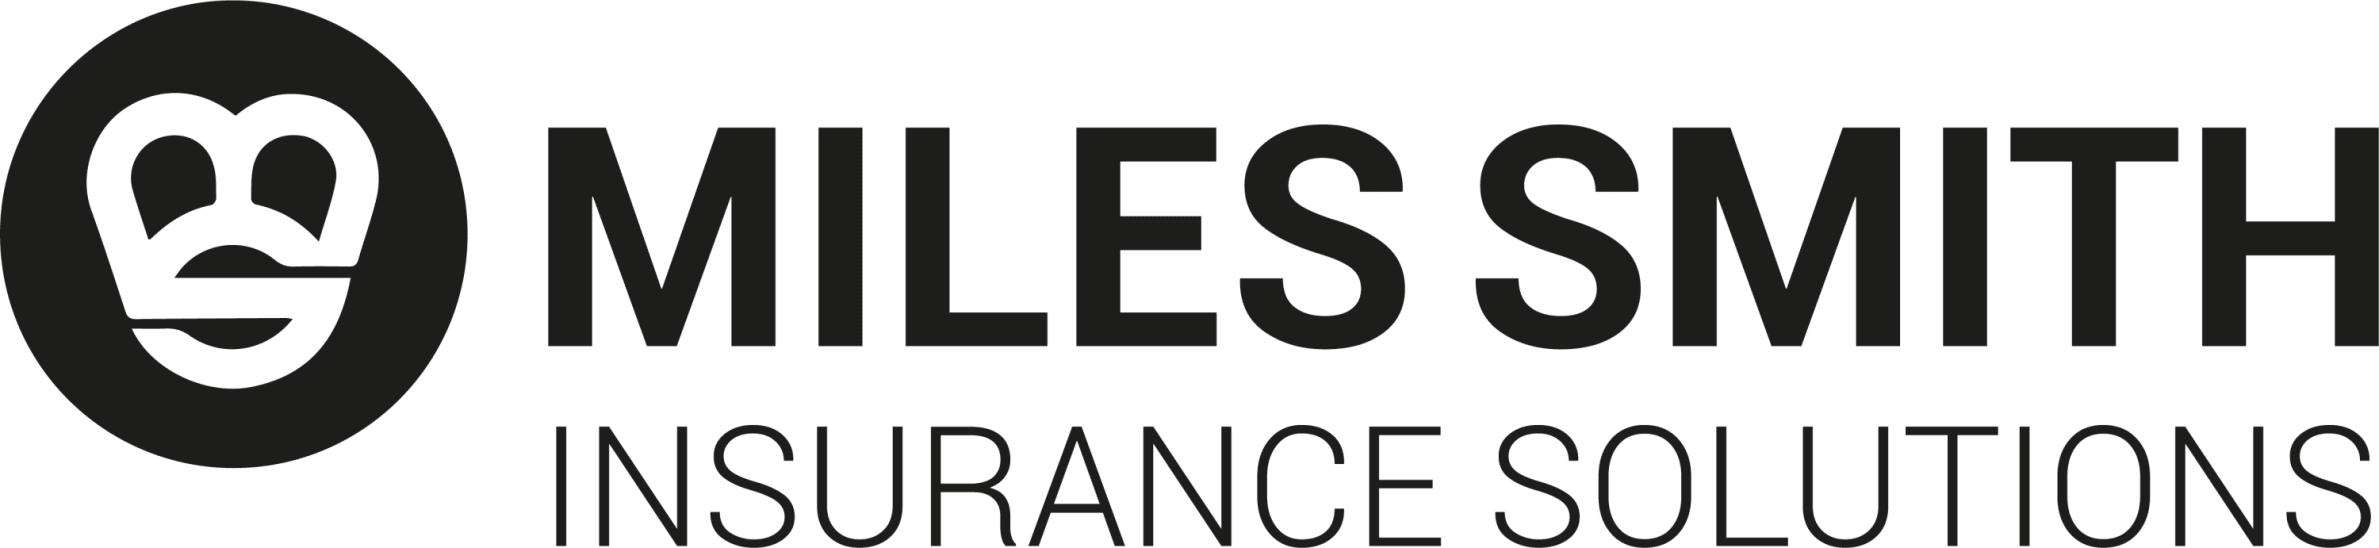 Miles Smith Insurance logo